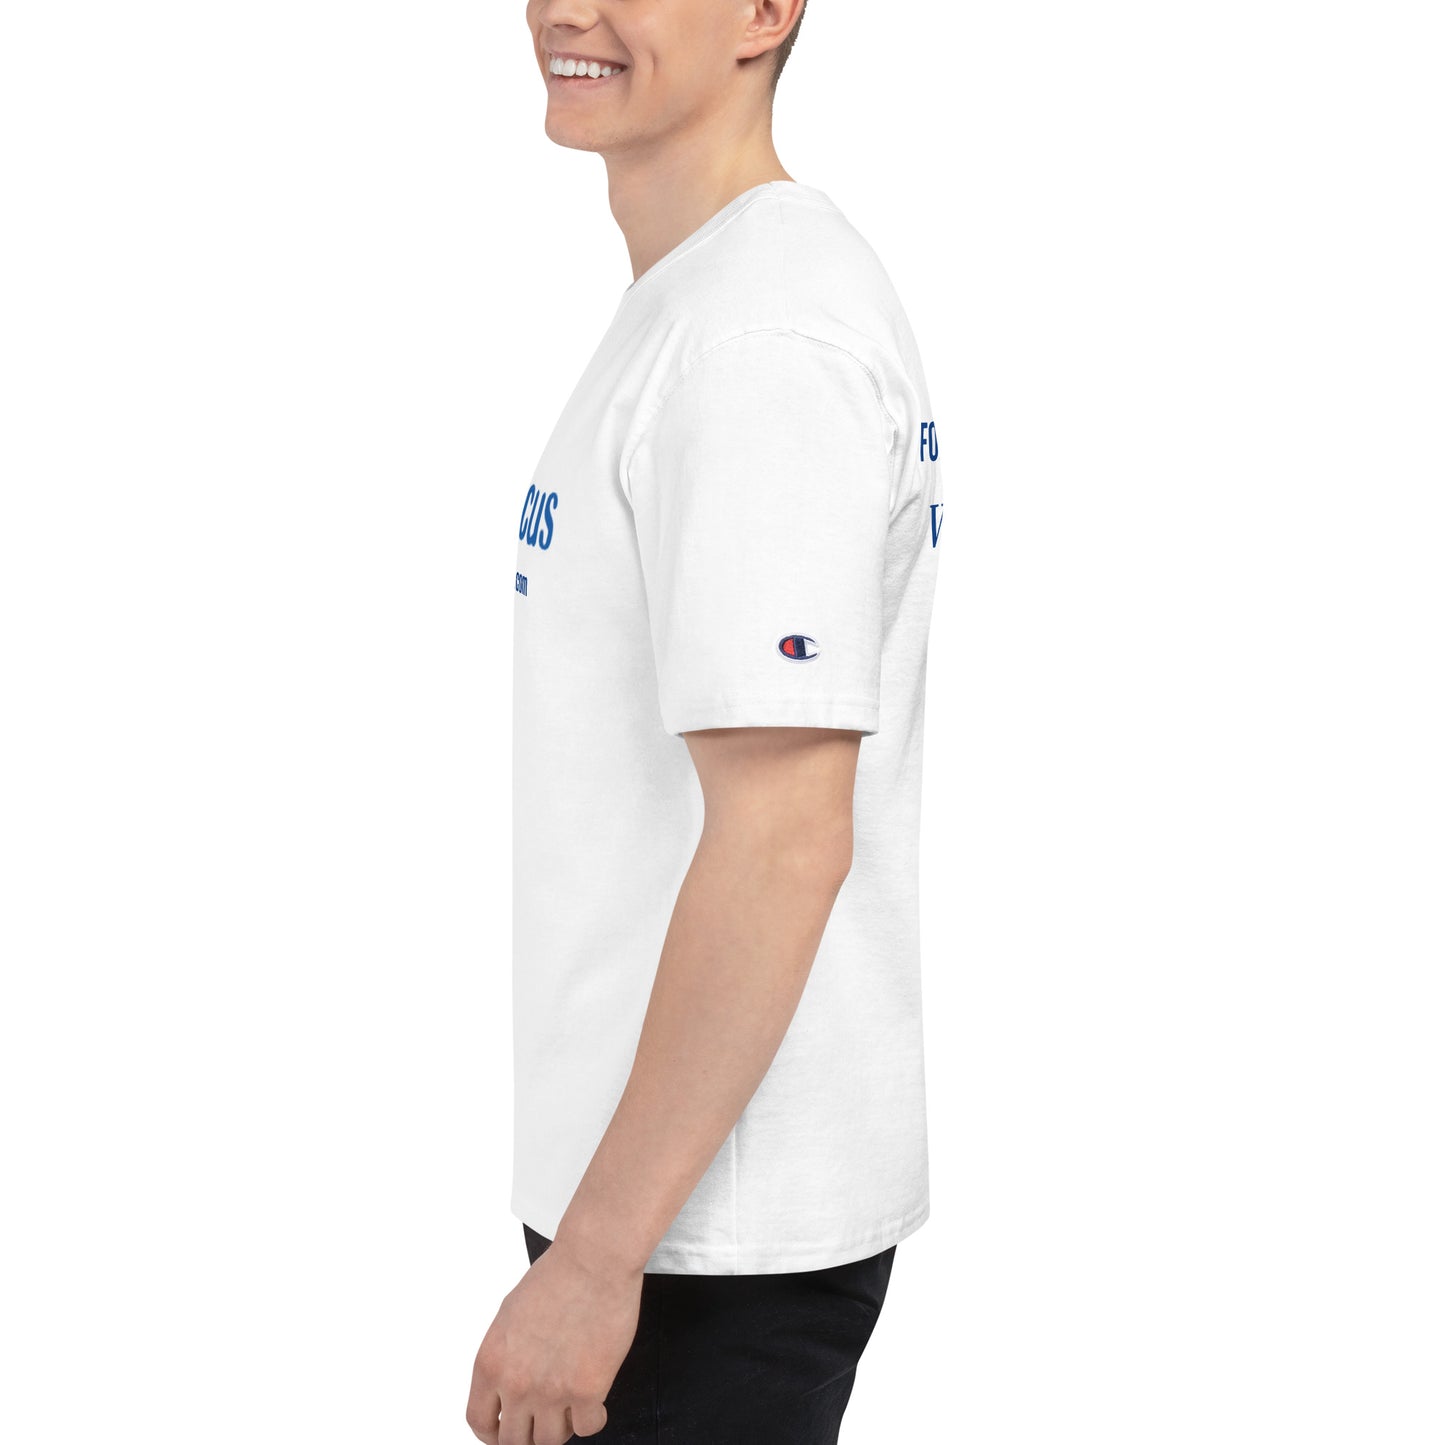 GuruFocus Follow Footsteps Champion T-Shirt - Grey / White